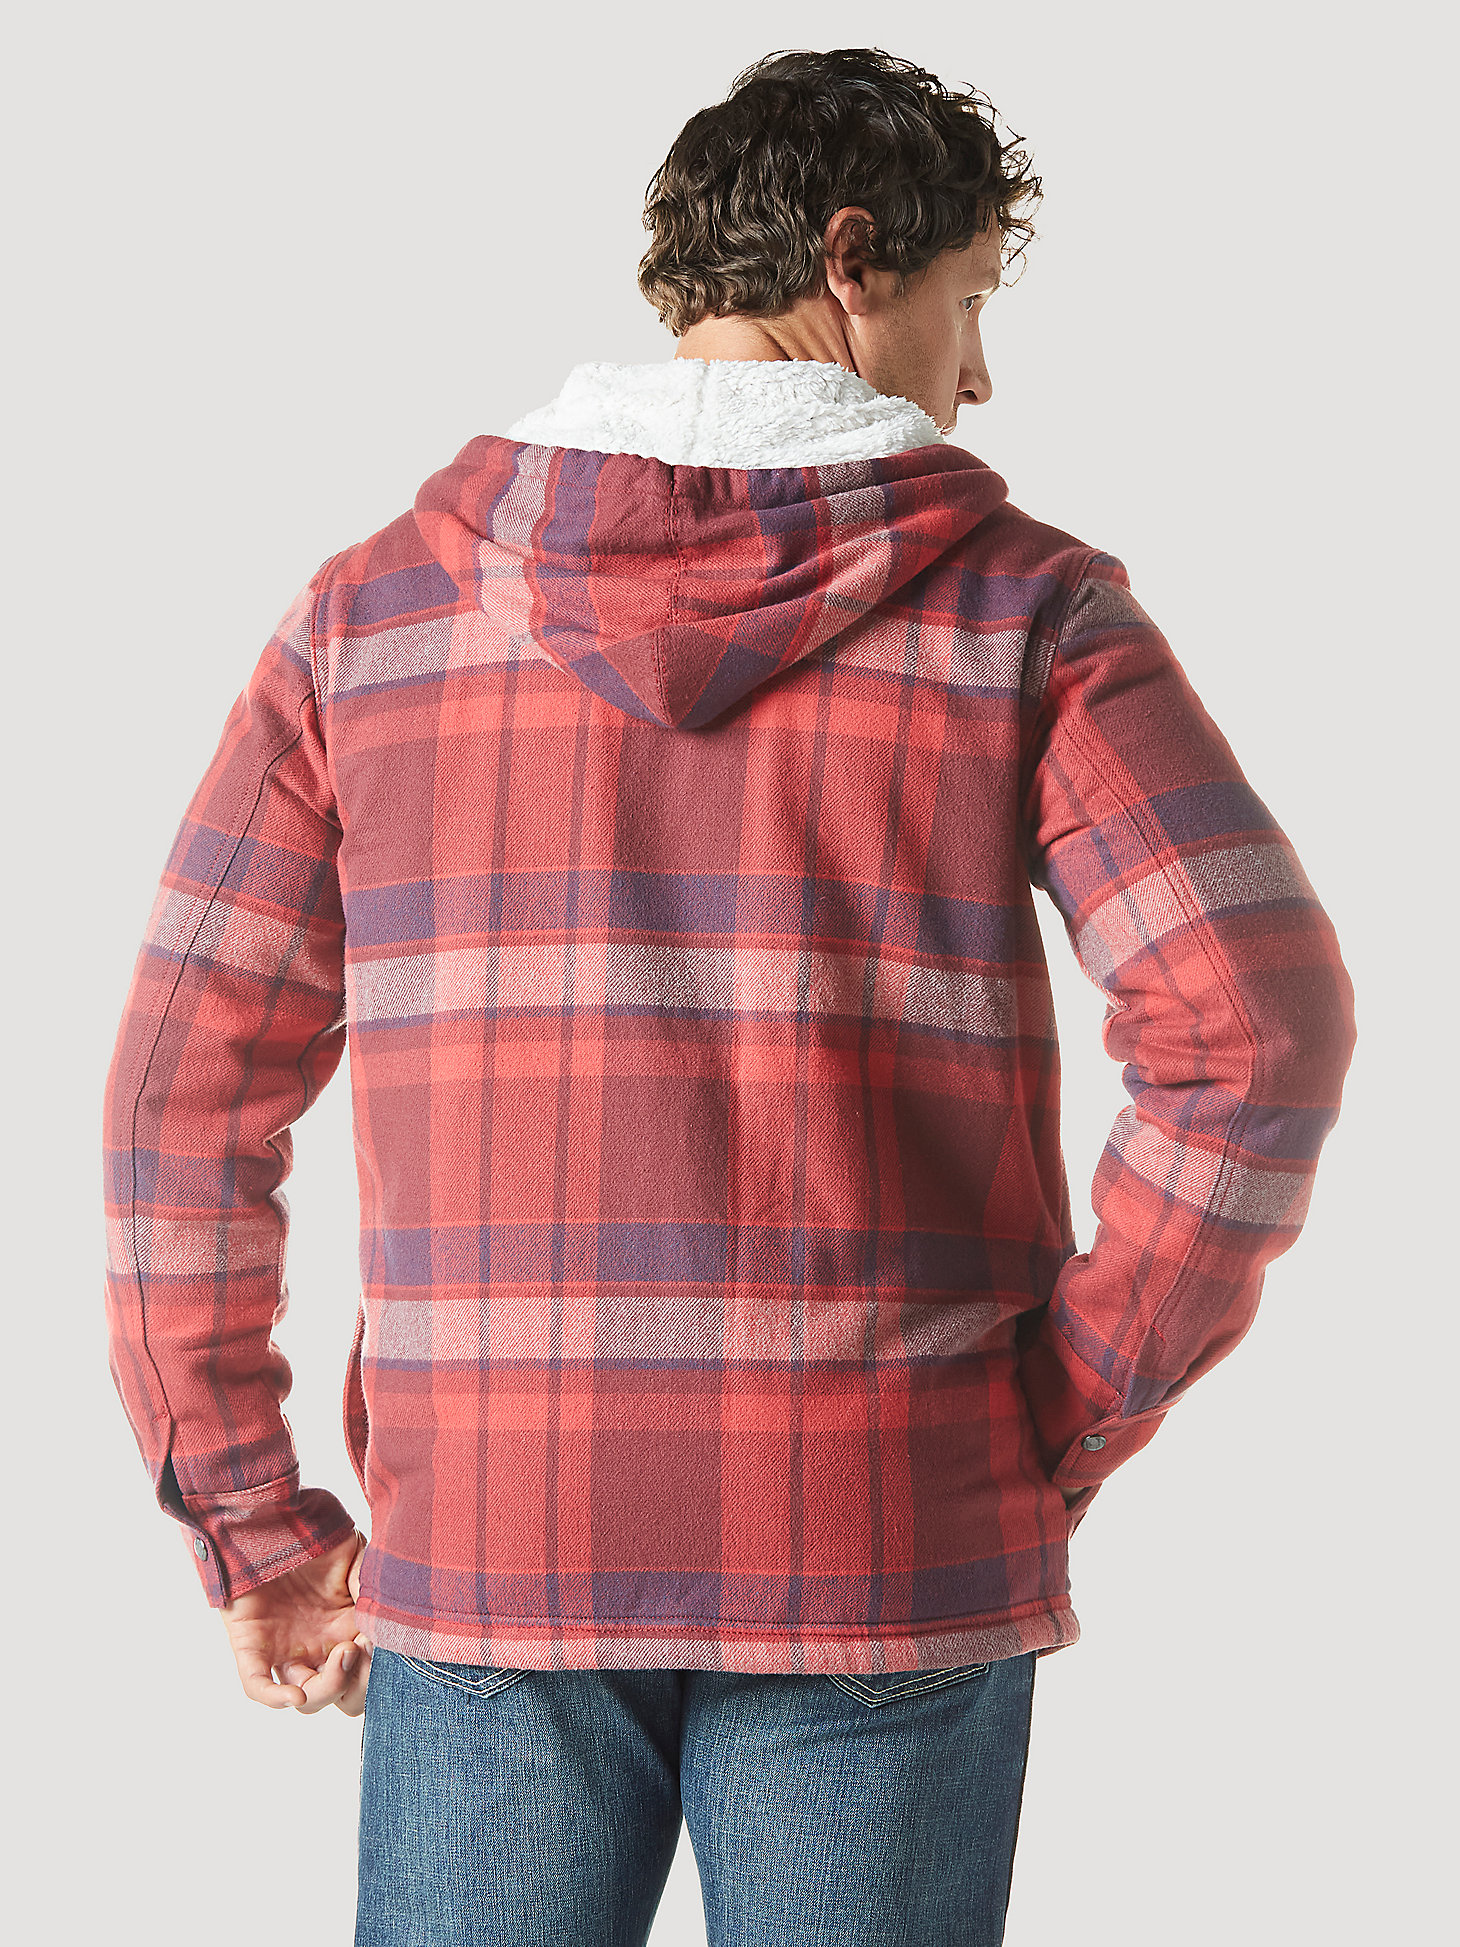 Men's Wrangler Sherpa Lined Flannel Hooded Shirt Jacket in Garnet alternative view 1